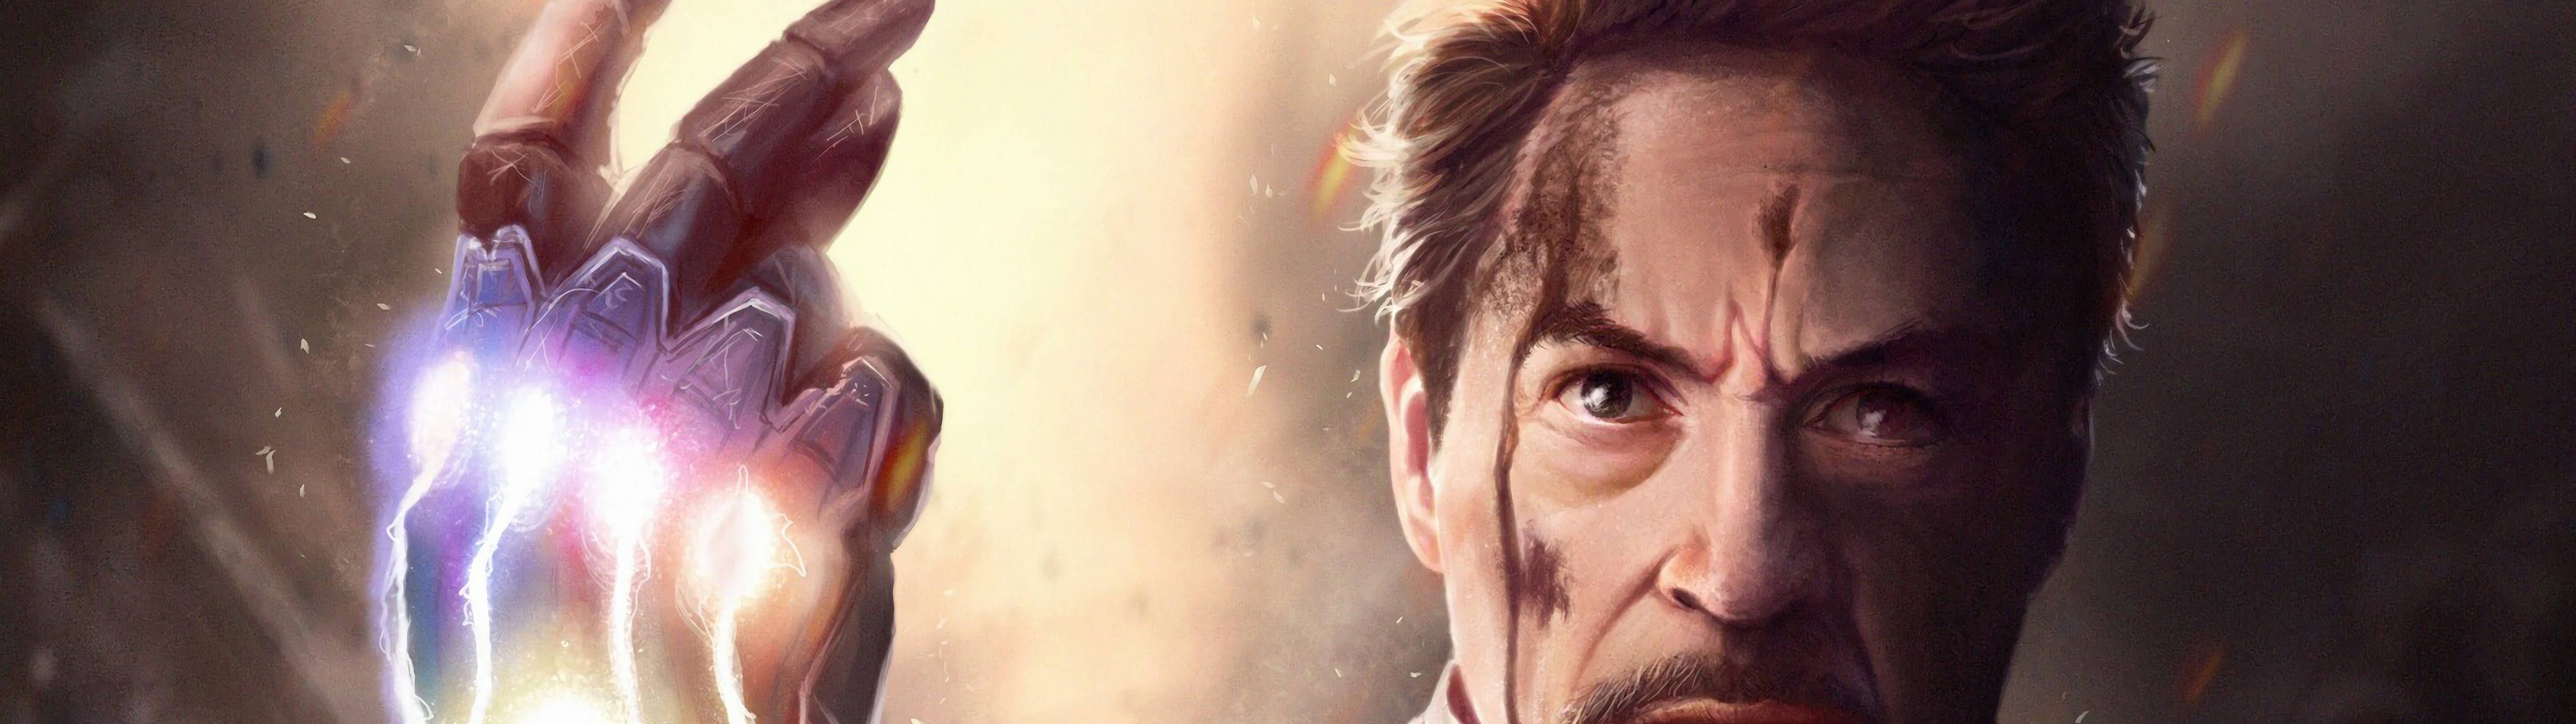 Marvel's Ironman Snap 5120 X 1440 Wallpaper